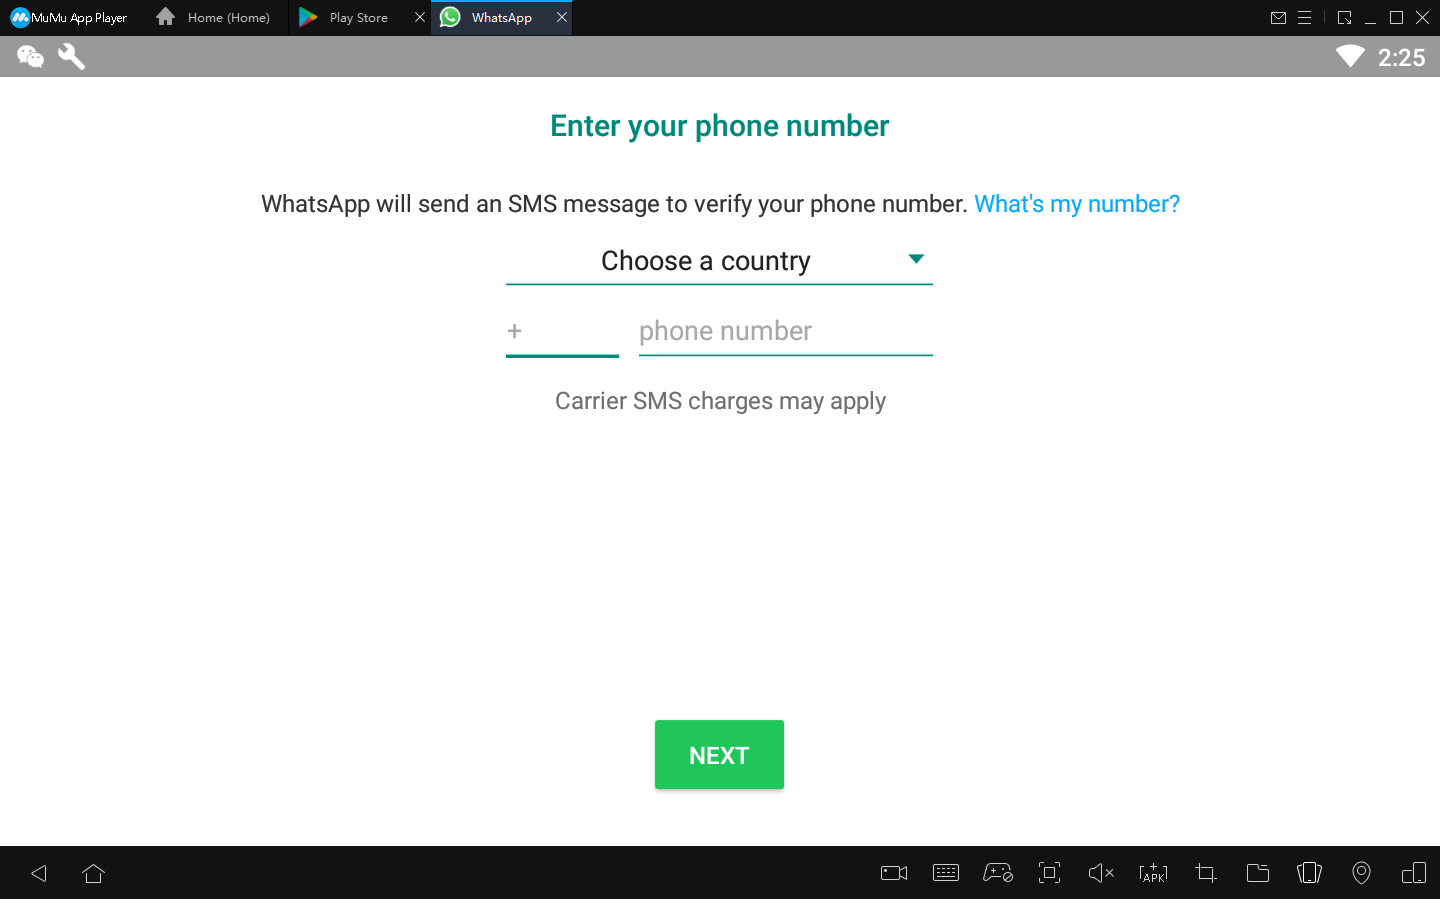 Bagaimana cara masuk ke WhatsApp dengan MuMu Player di PC dan menambahkan kontak baru?4